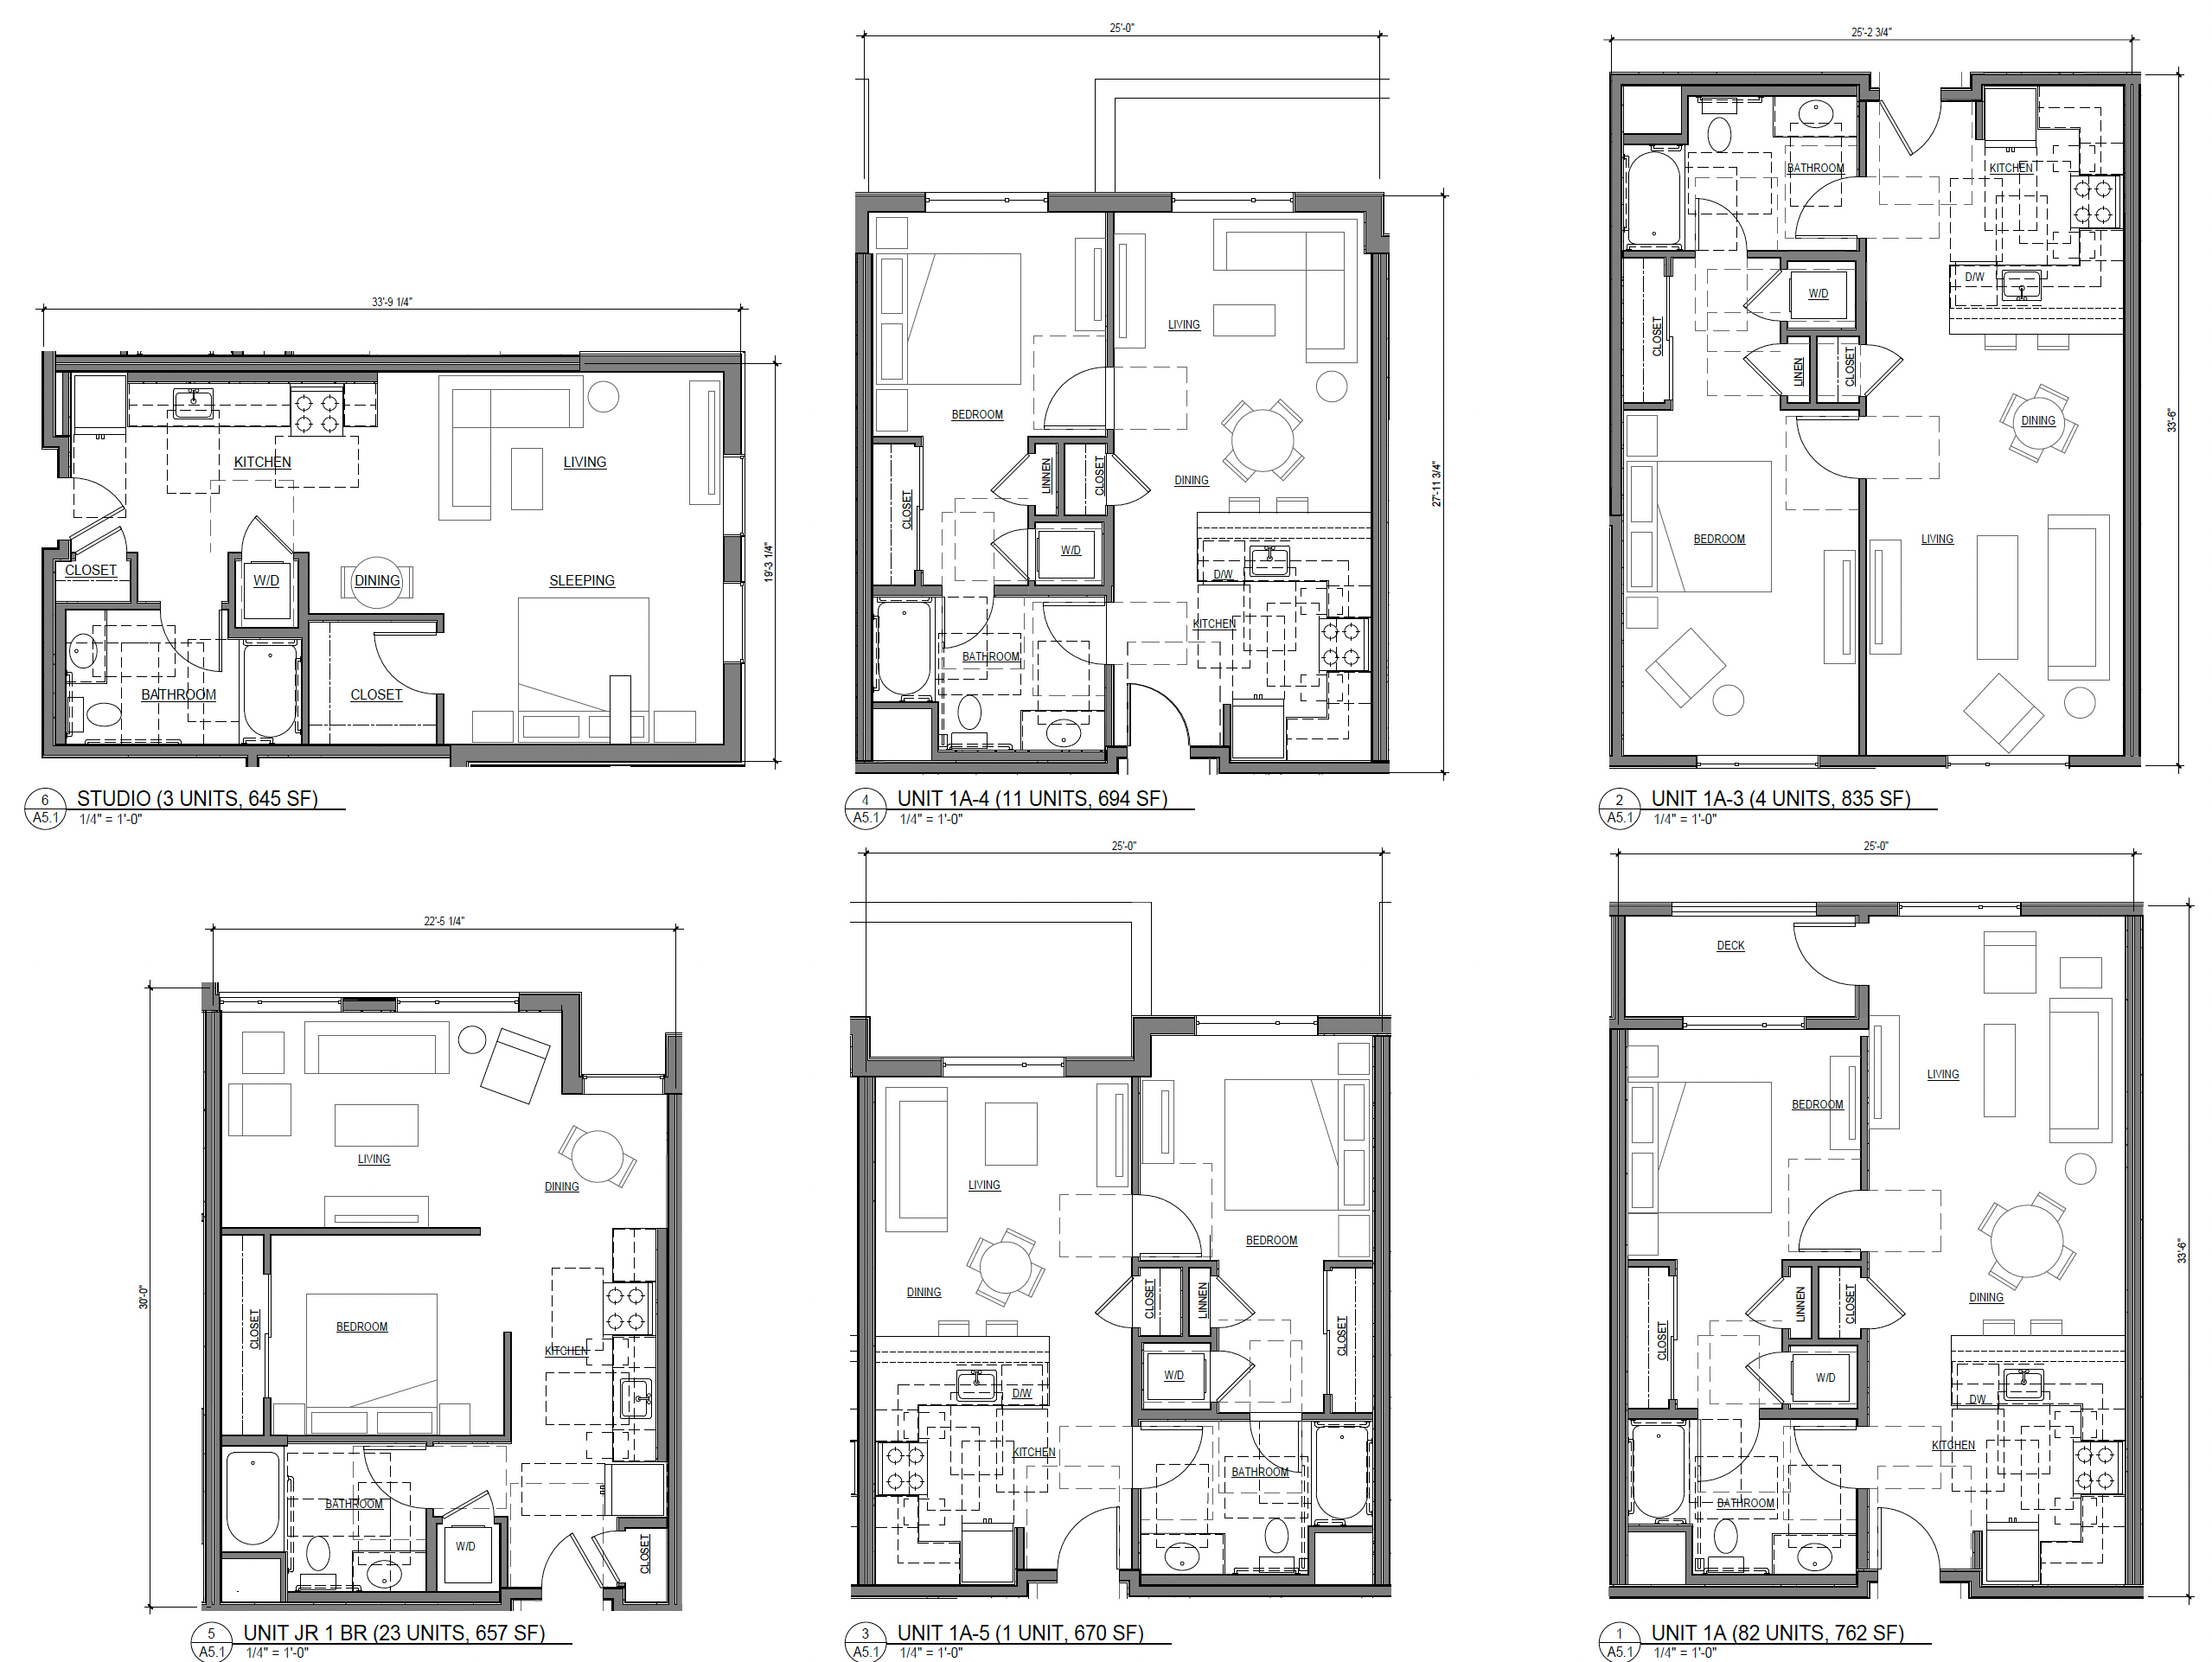 1 Adrian Court average unit floor plan, illustrations by Seidel Architects